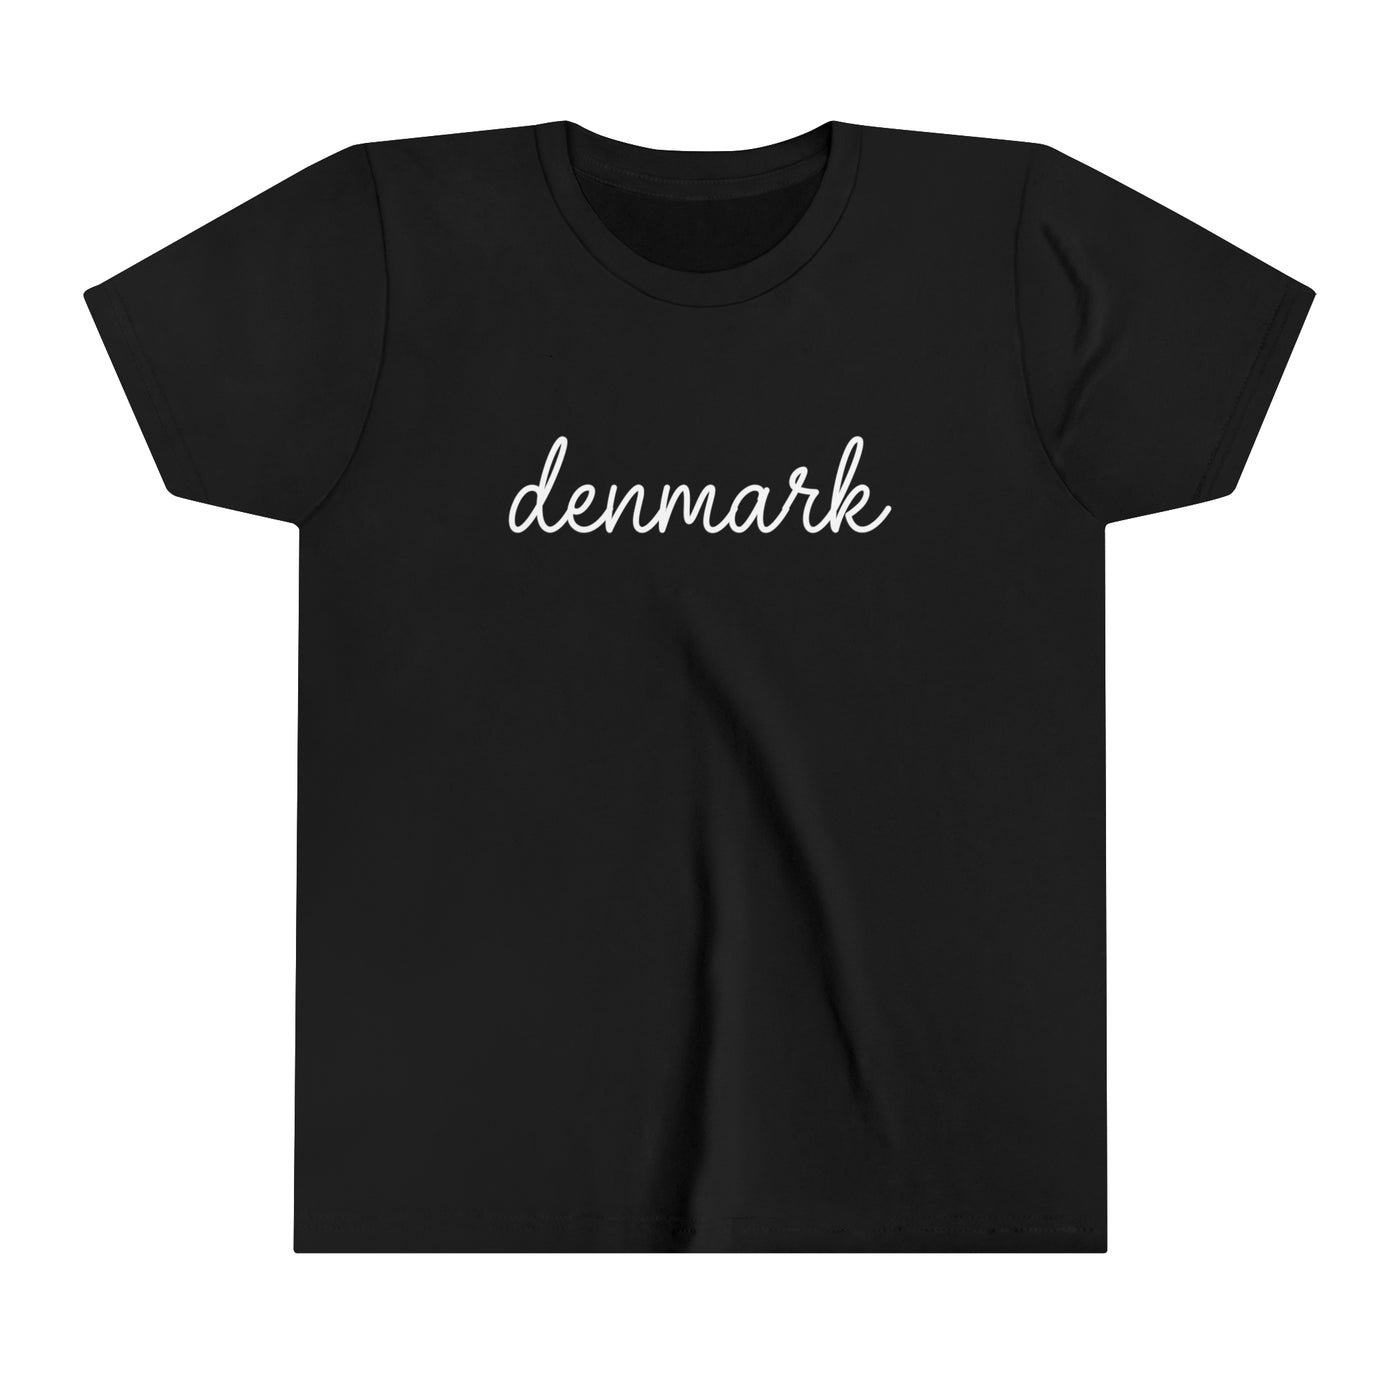 Denmark Script Kids T-Shirt